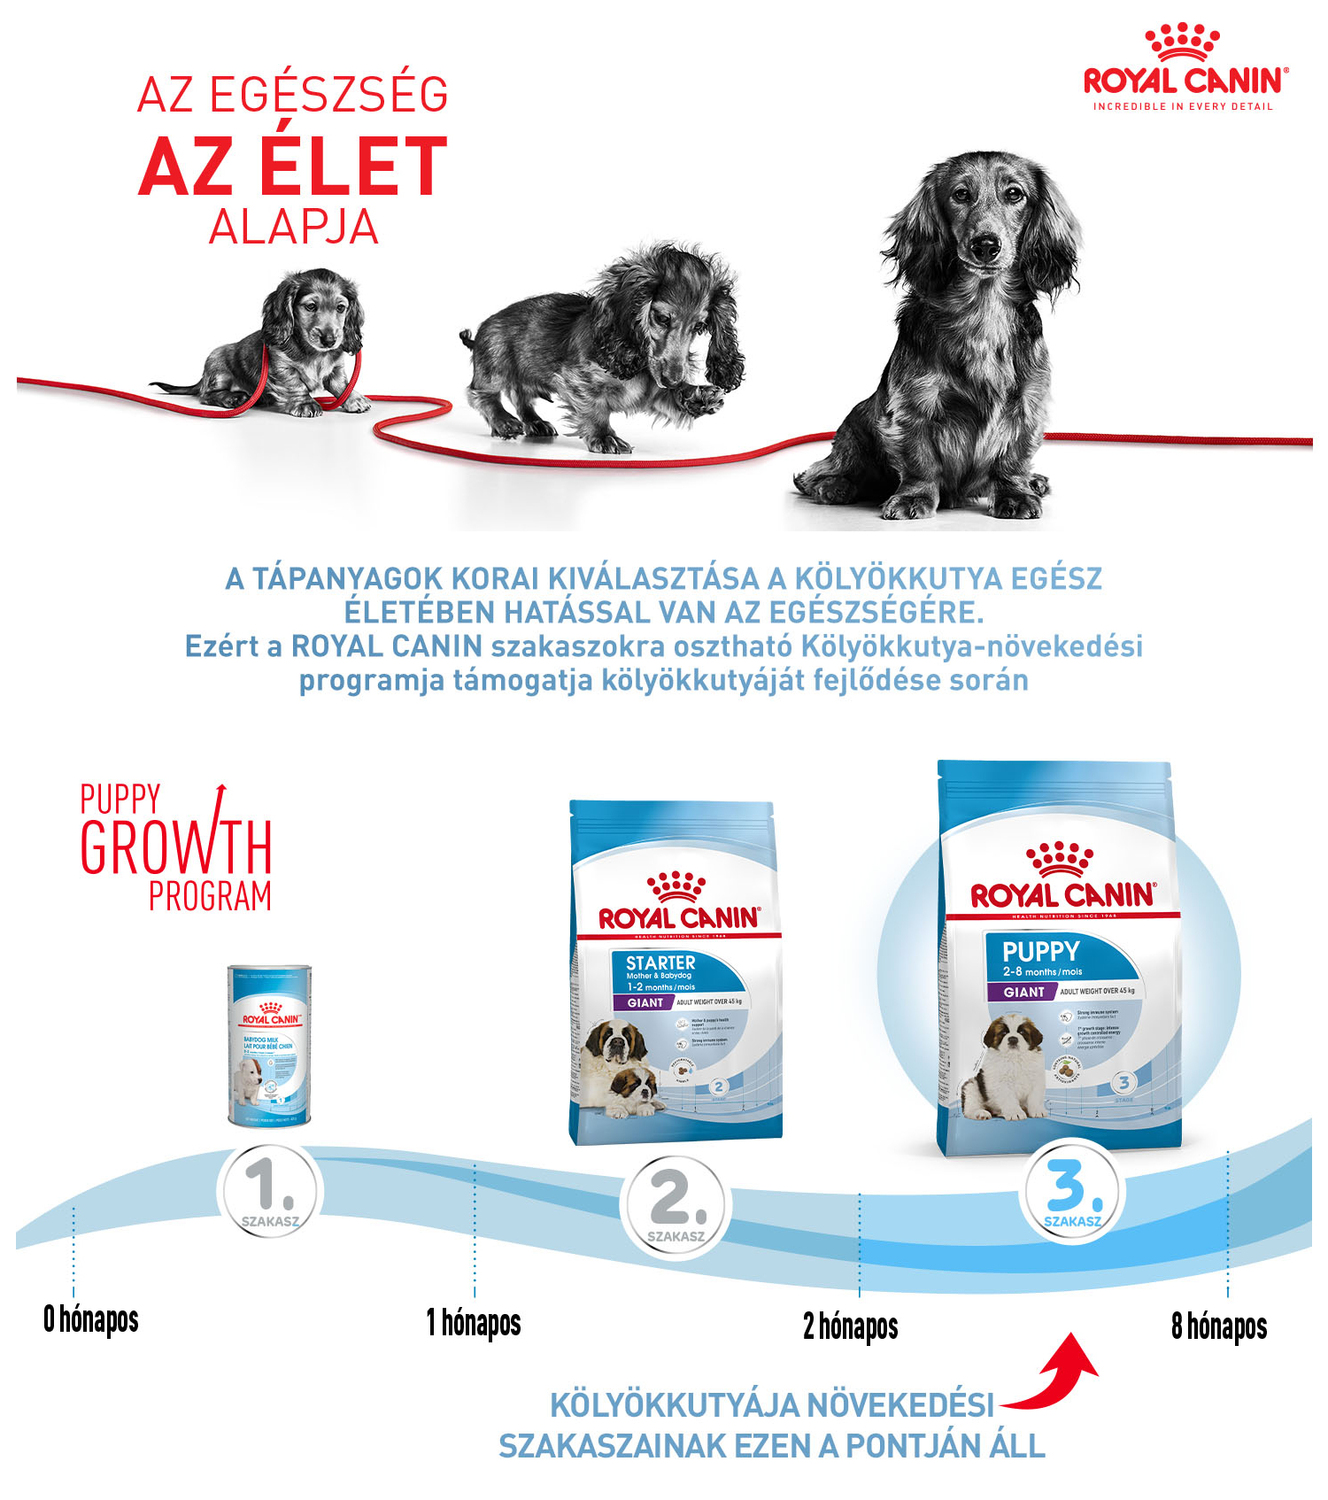 Royal Canin Puppy Giant táp - Információk